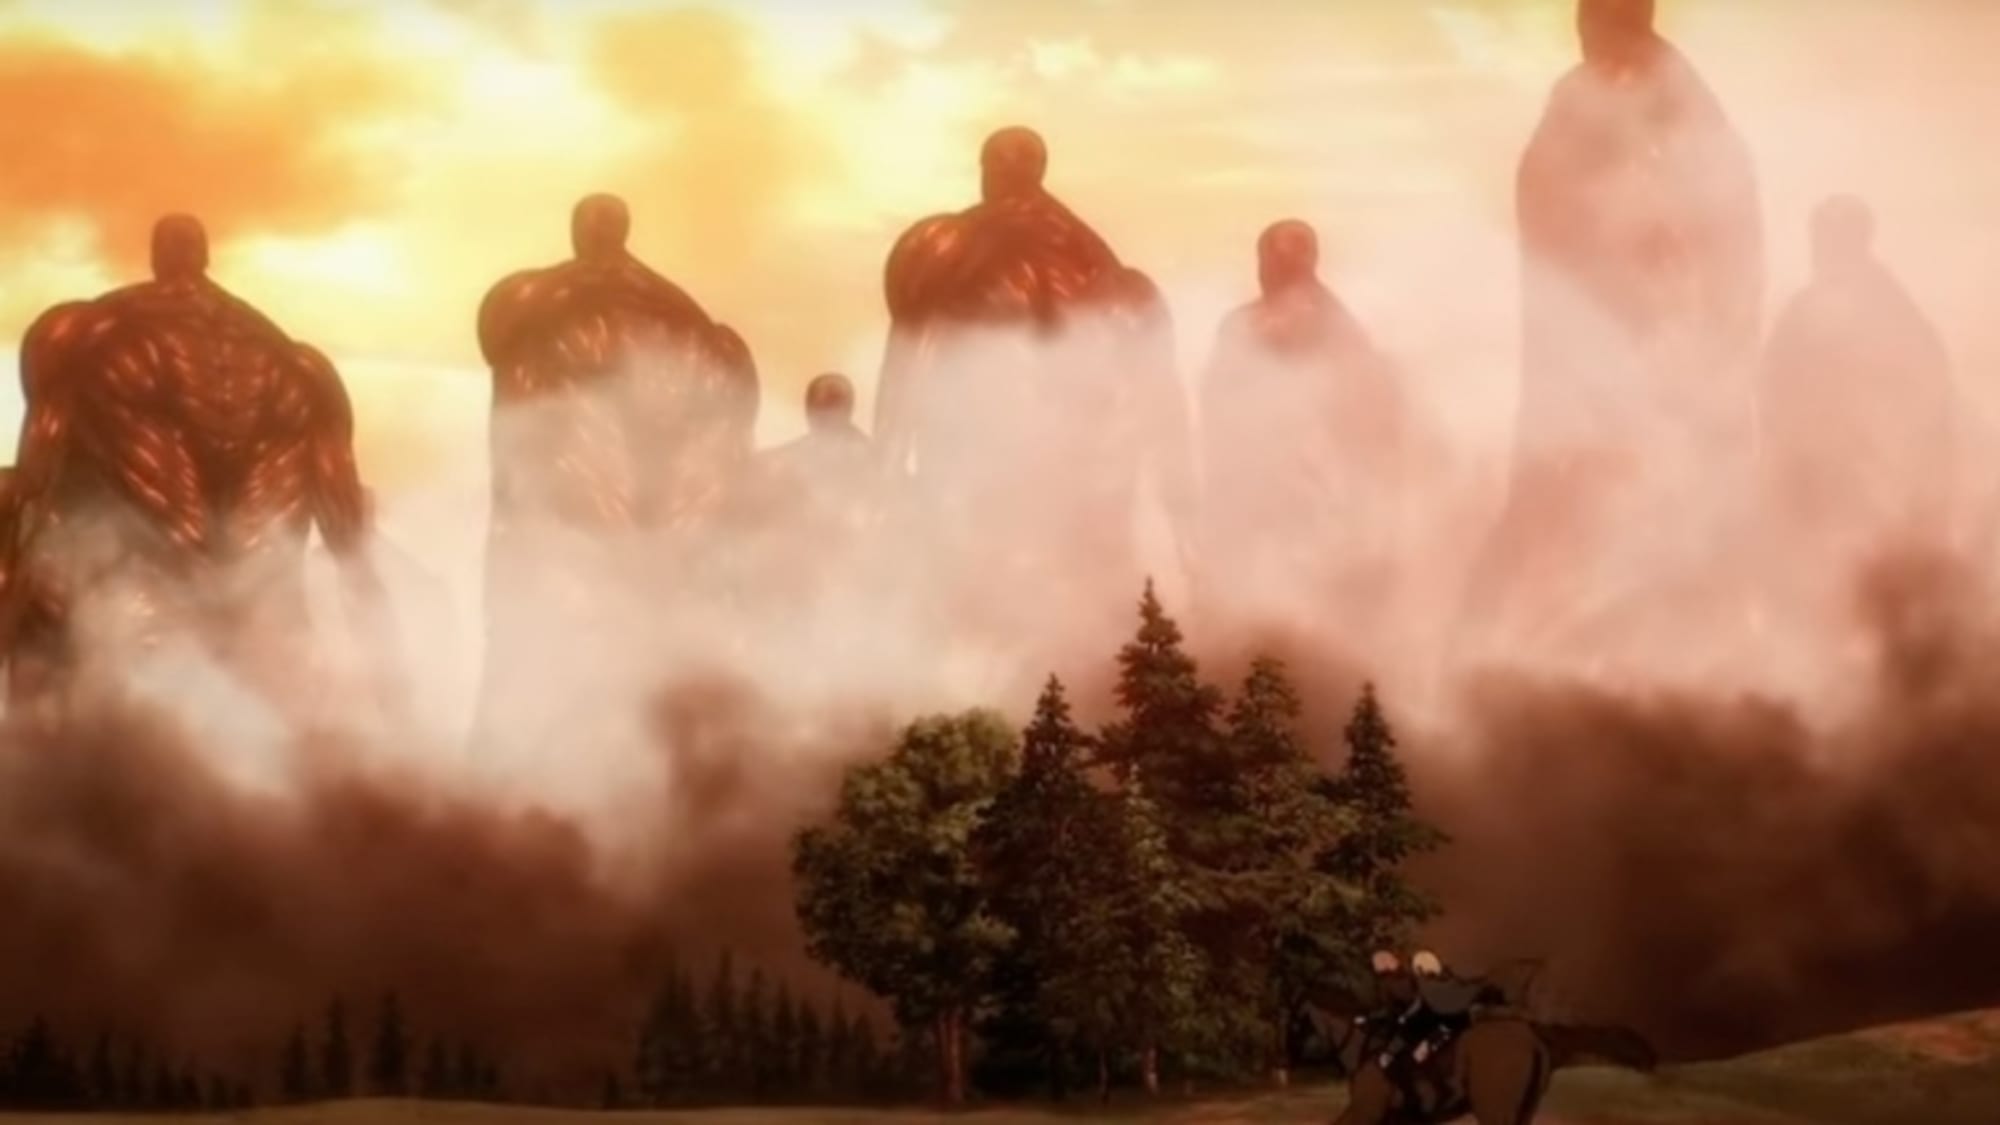 Attack On Titan: Final Season Part 2: Everything We Know So Far